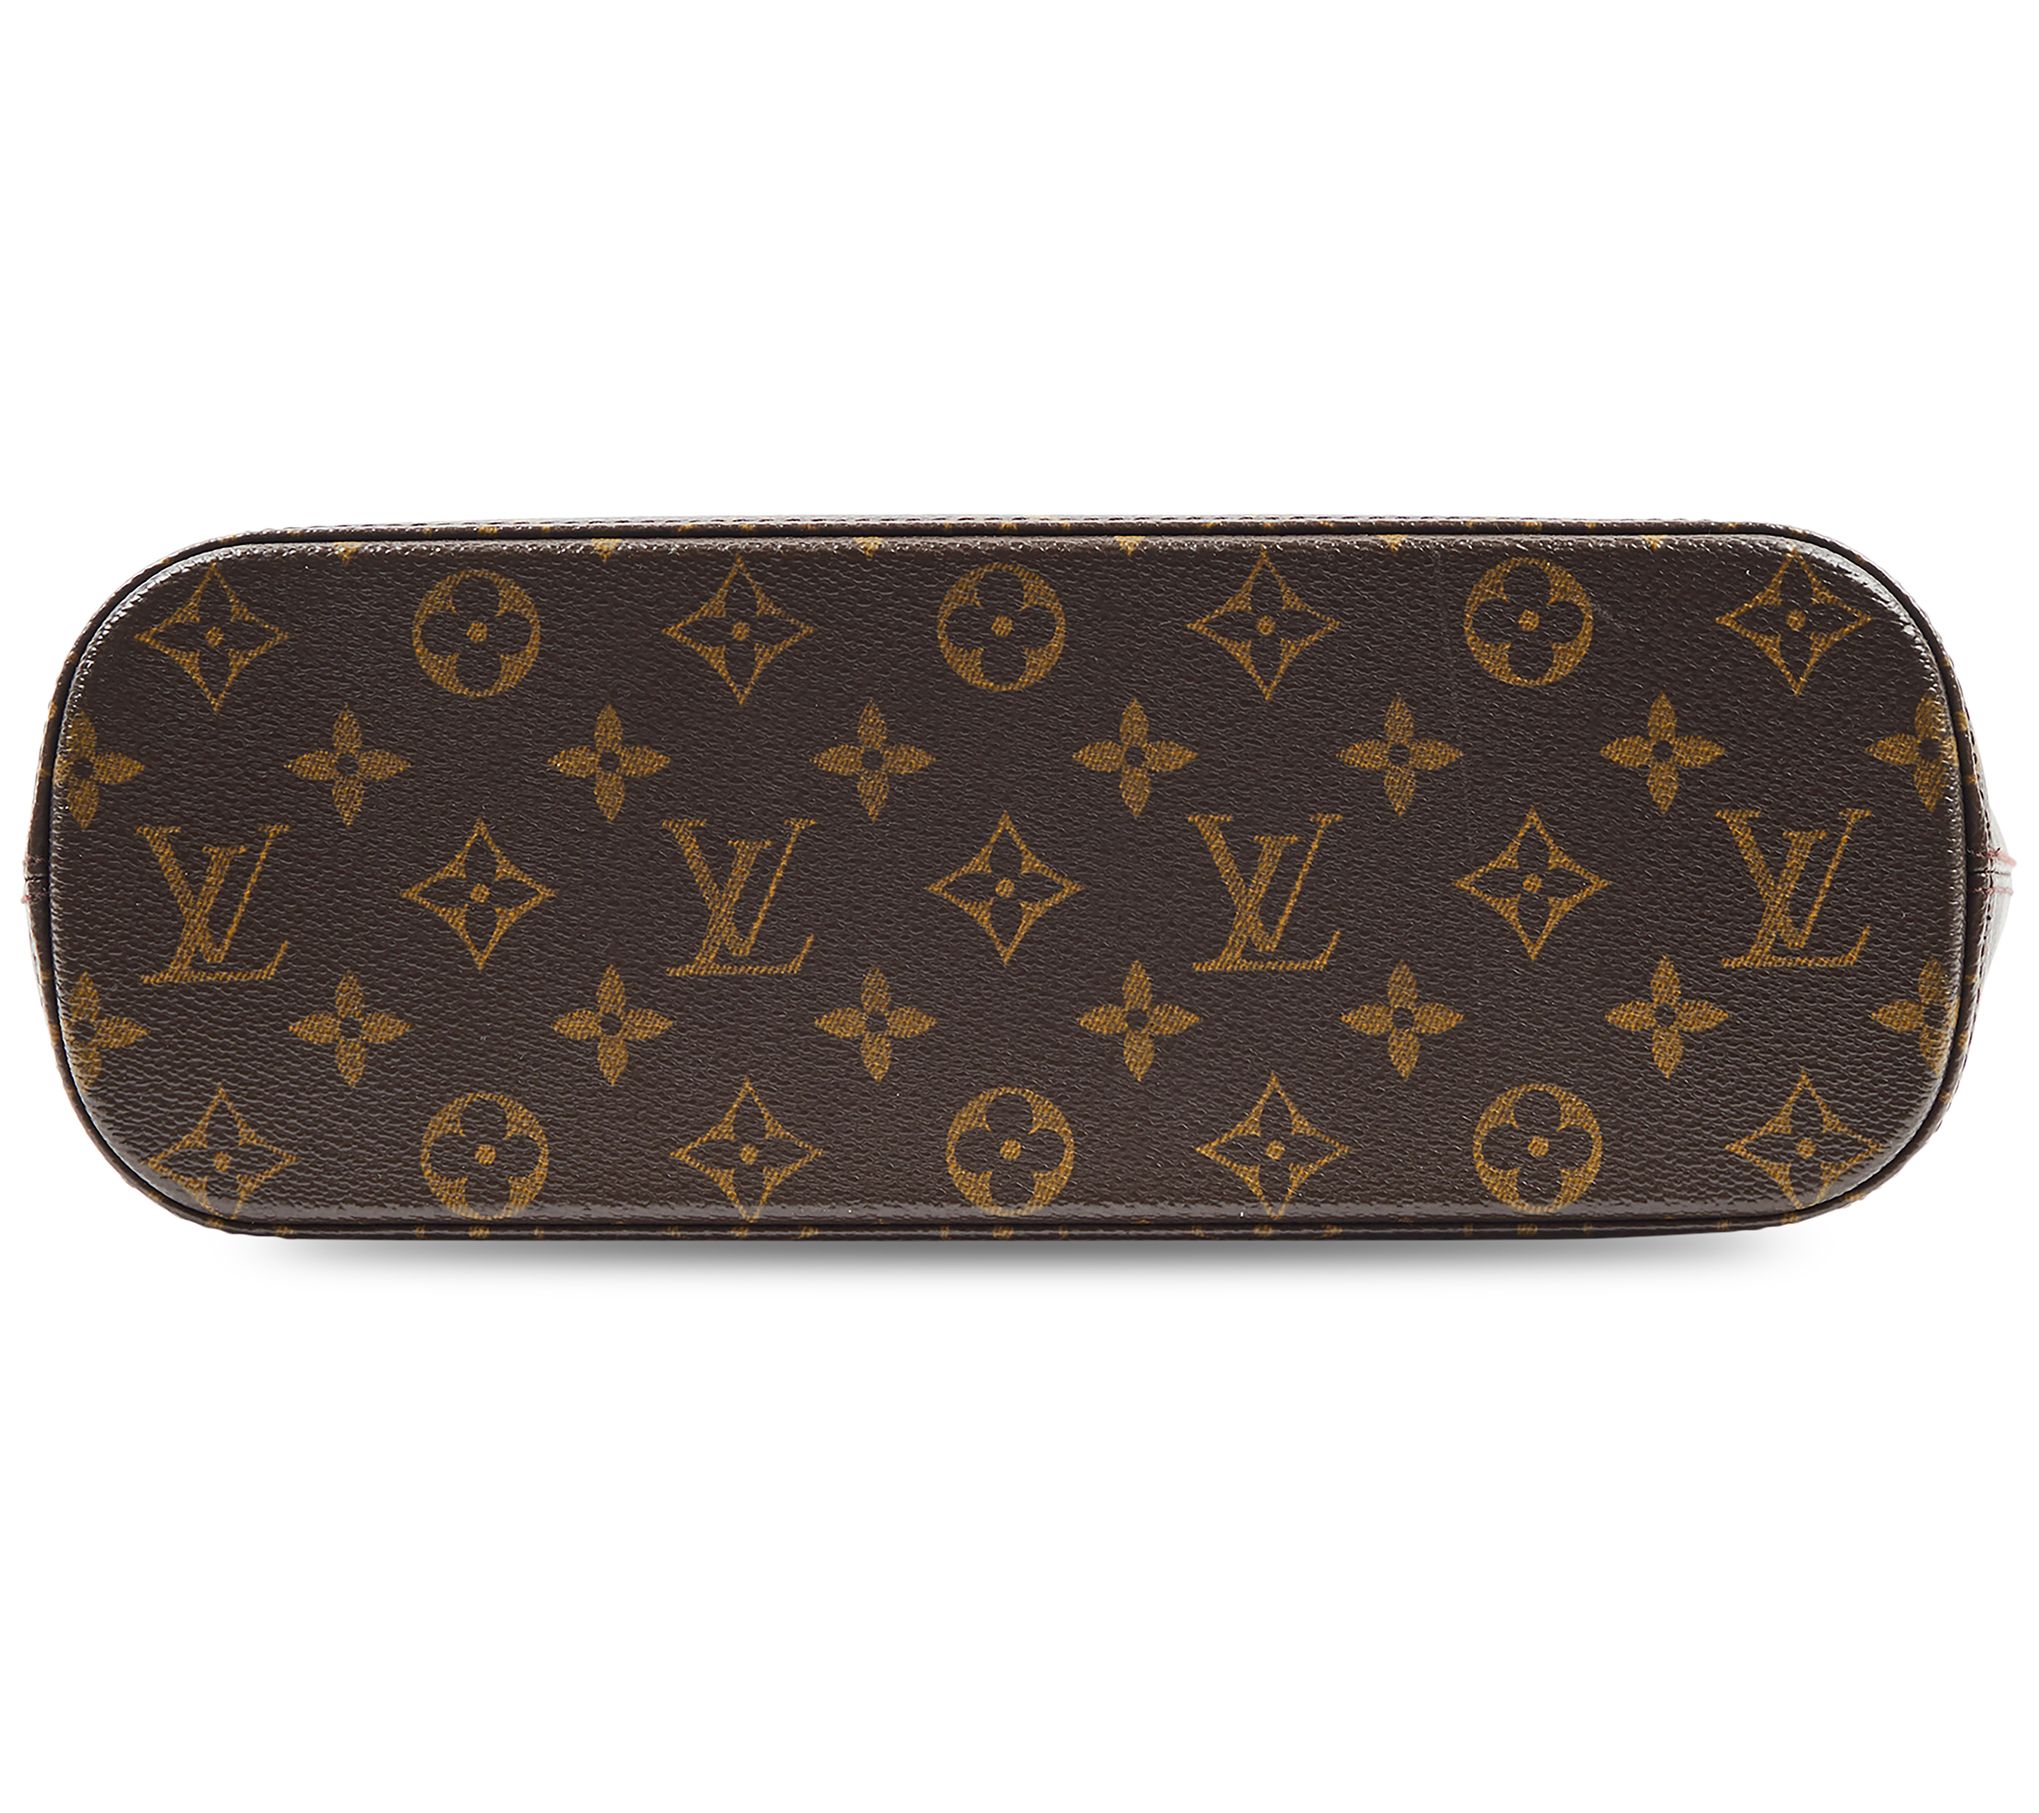 Men's brown and tan monogram coated canvas Louis Vuitton